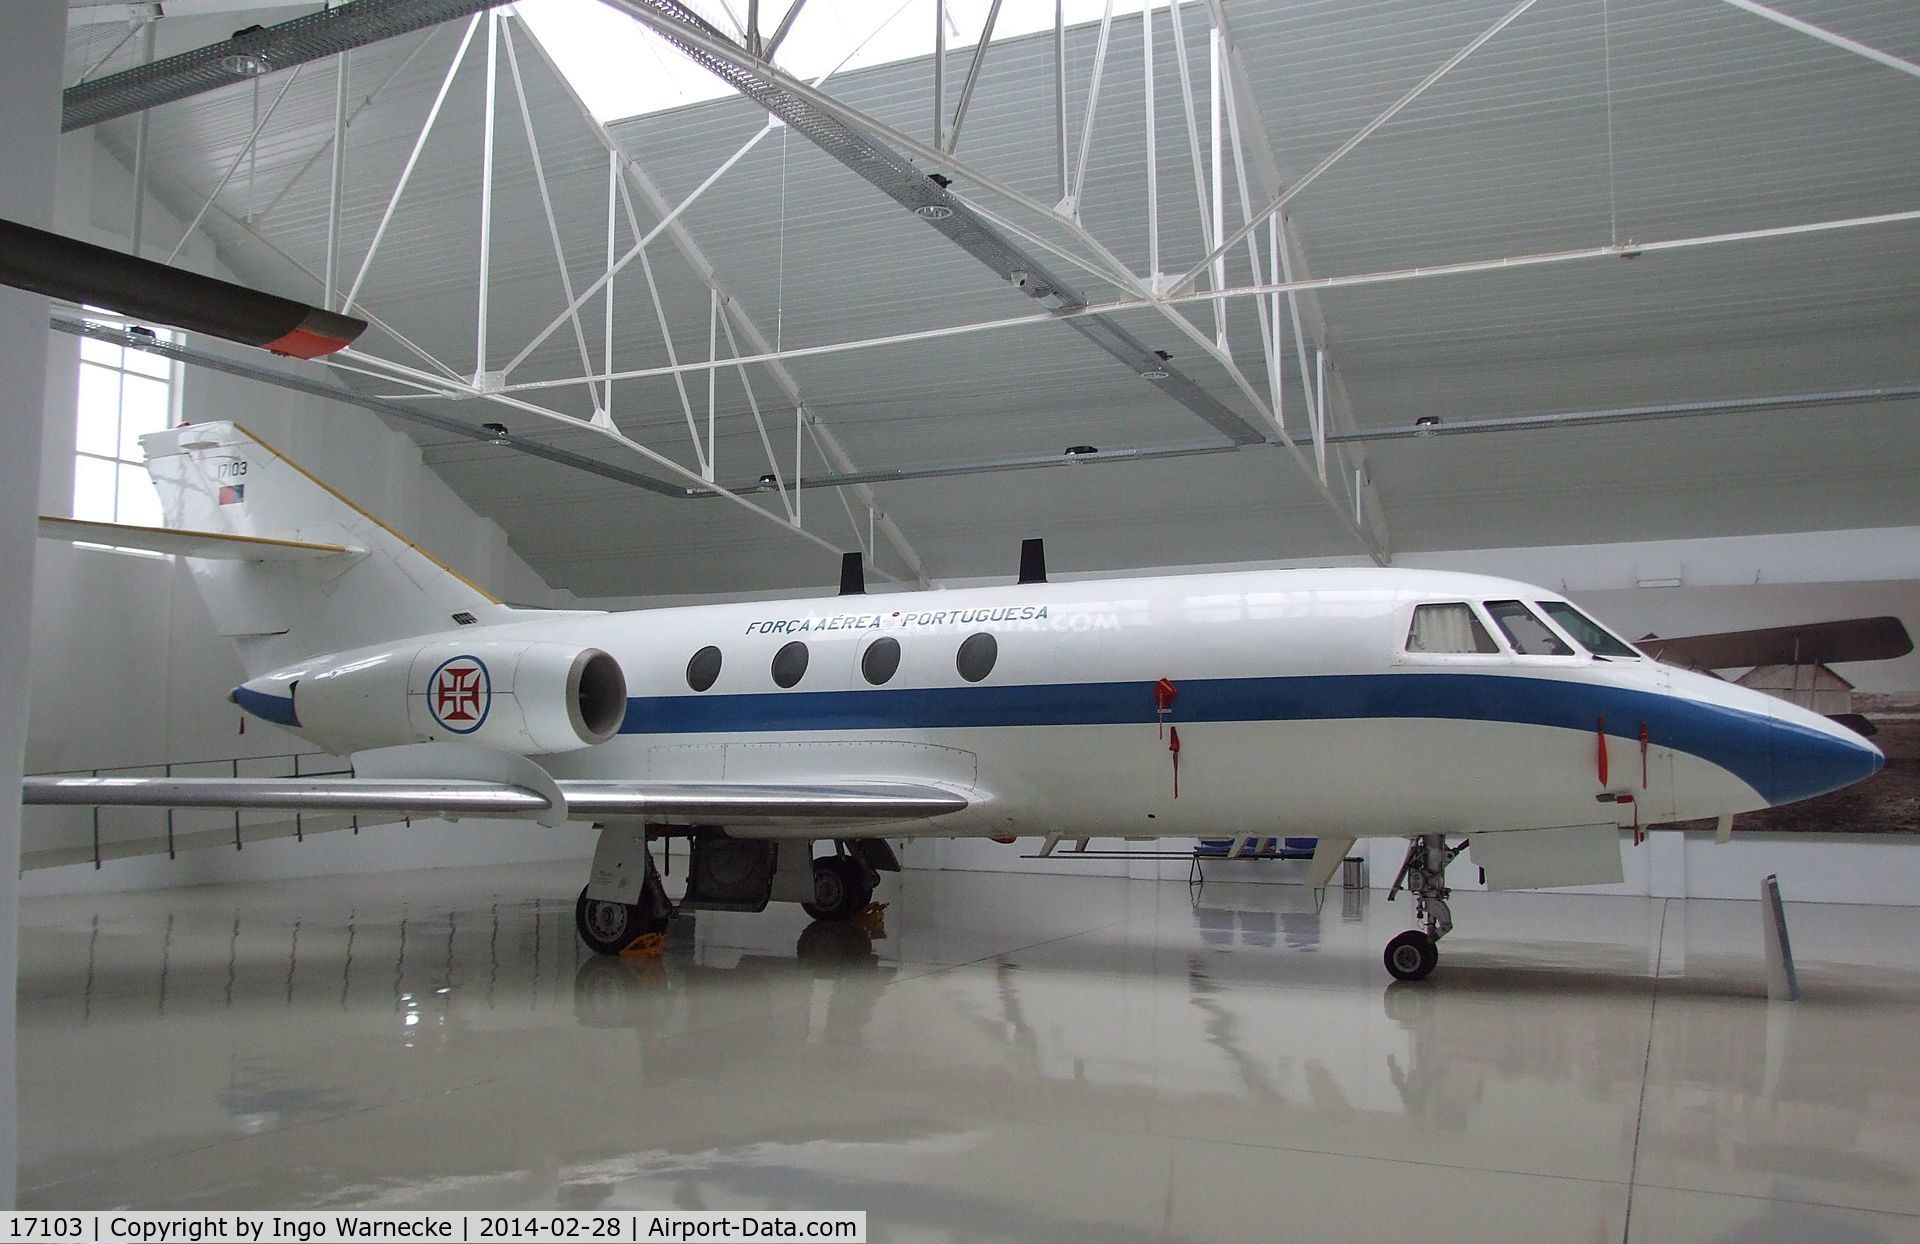 17103, 1969 Dassault Falcon (Mystere) 20DC C/N 217, Dassault Mystere / Falcon 20DC at the Museu do Ar, Sintra